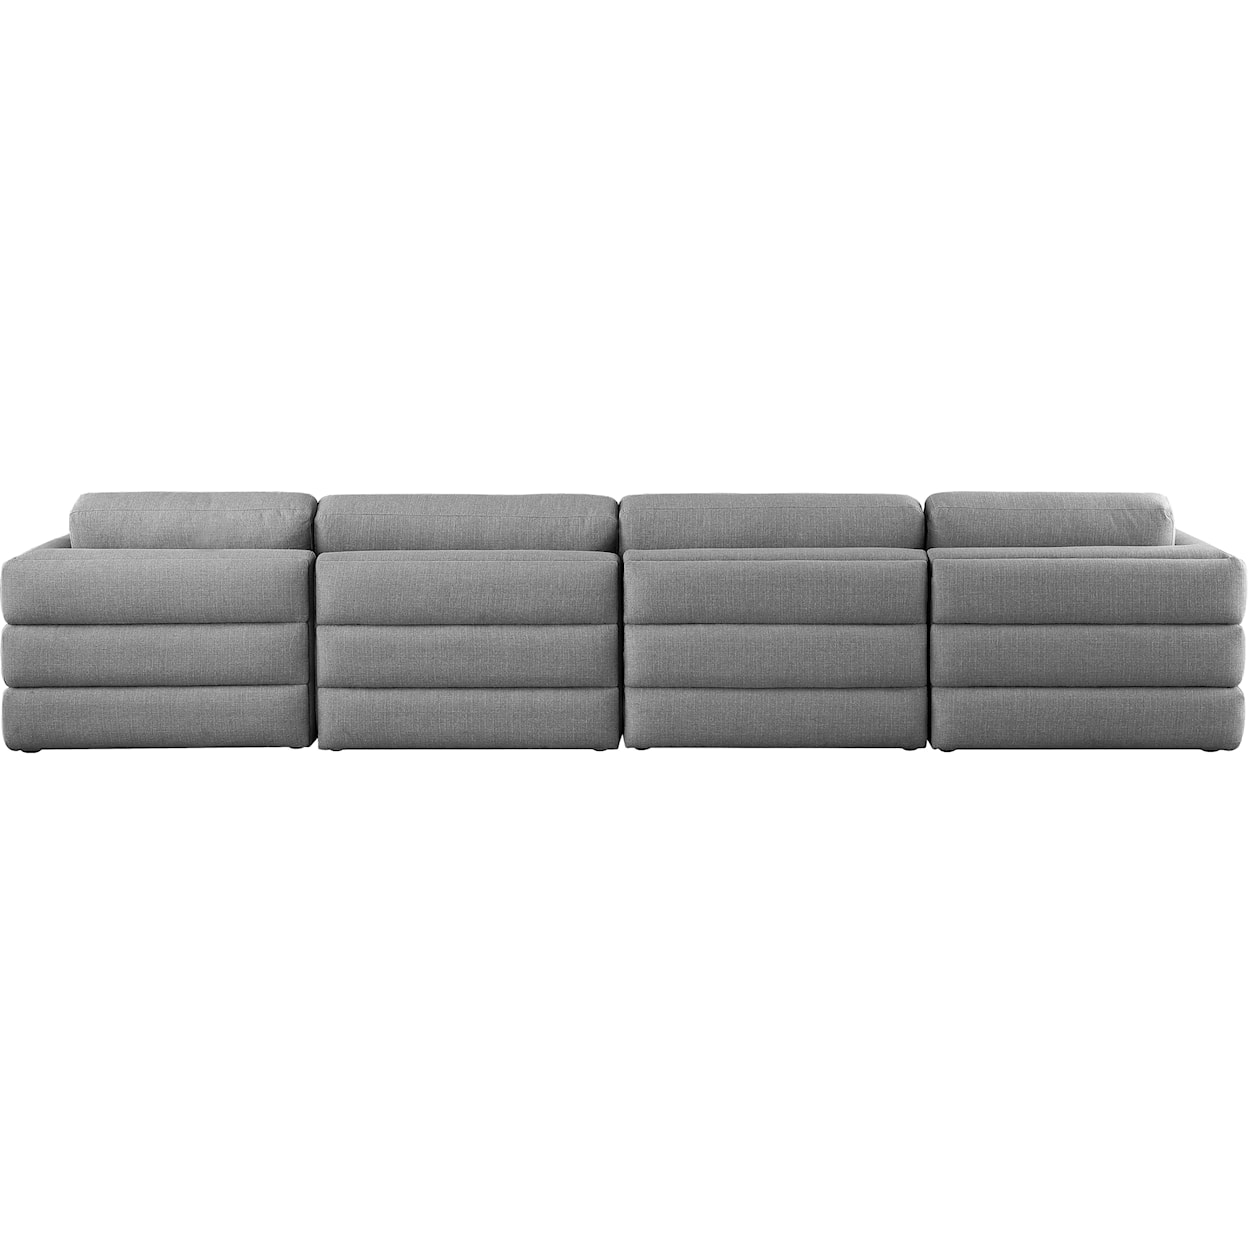 Meridian Furniture Beckham Modular Sofa